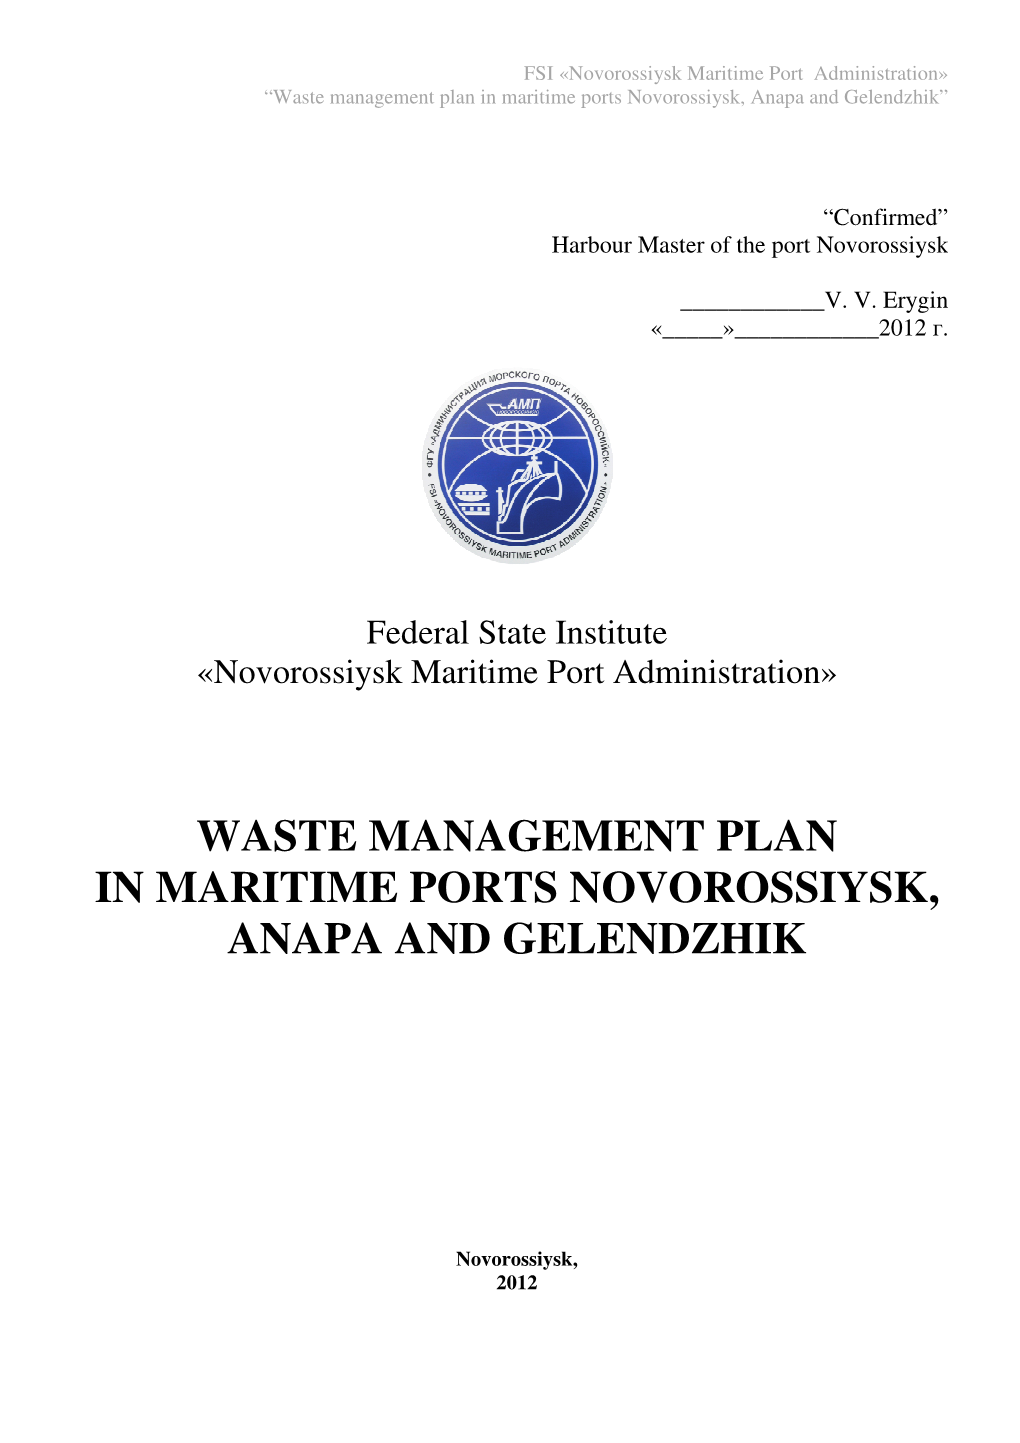 Waste Managem in Maritime Ports Anapa and Waste Management P Maritime Ports Novorossiysk Anapa and Gelendzhik Ement Plan Novoro